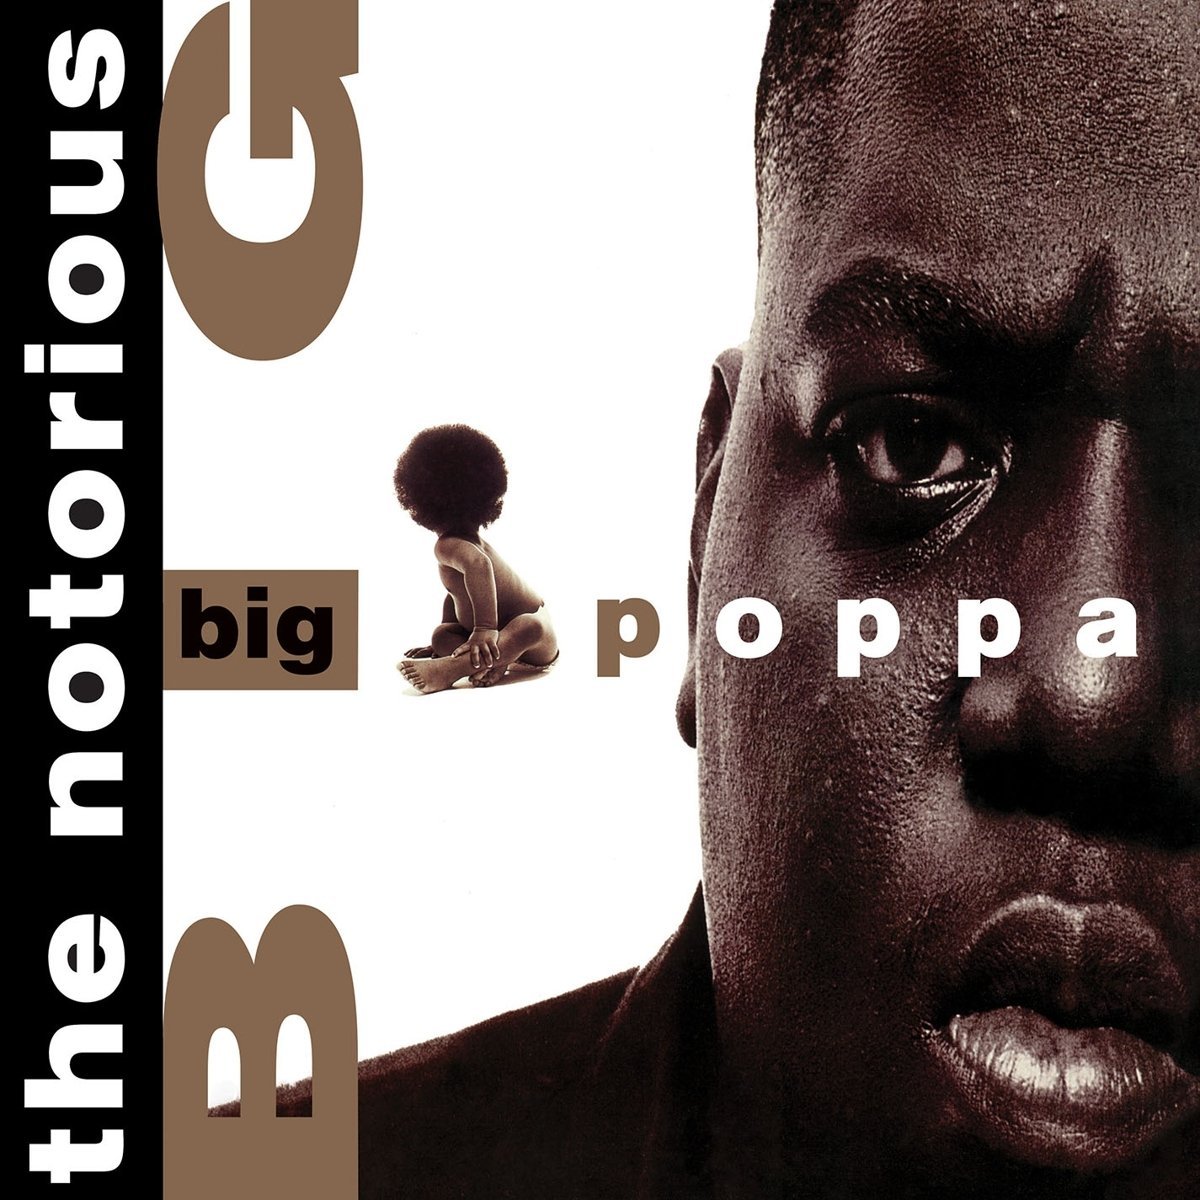 Big Poppa 12inch The Notorious B I G ザノトーリアスb I G Hiphop R B ディスクユニオン オンラインショップ Diskunion Net